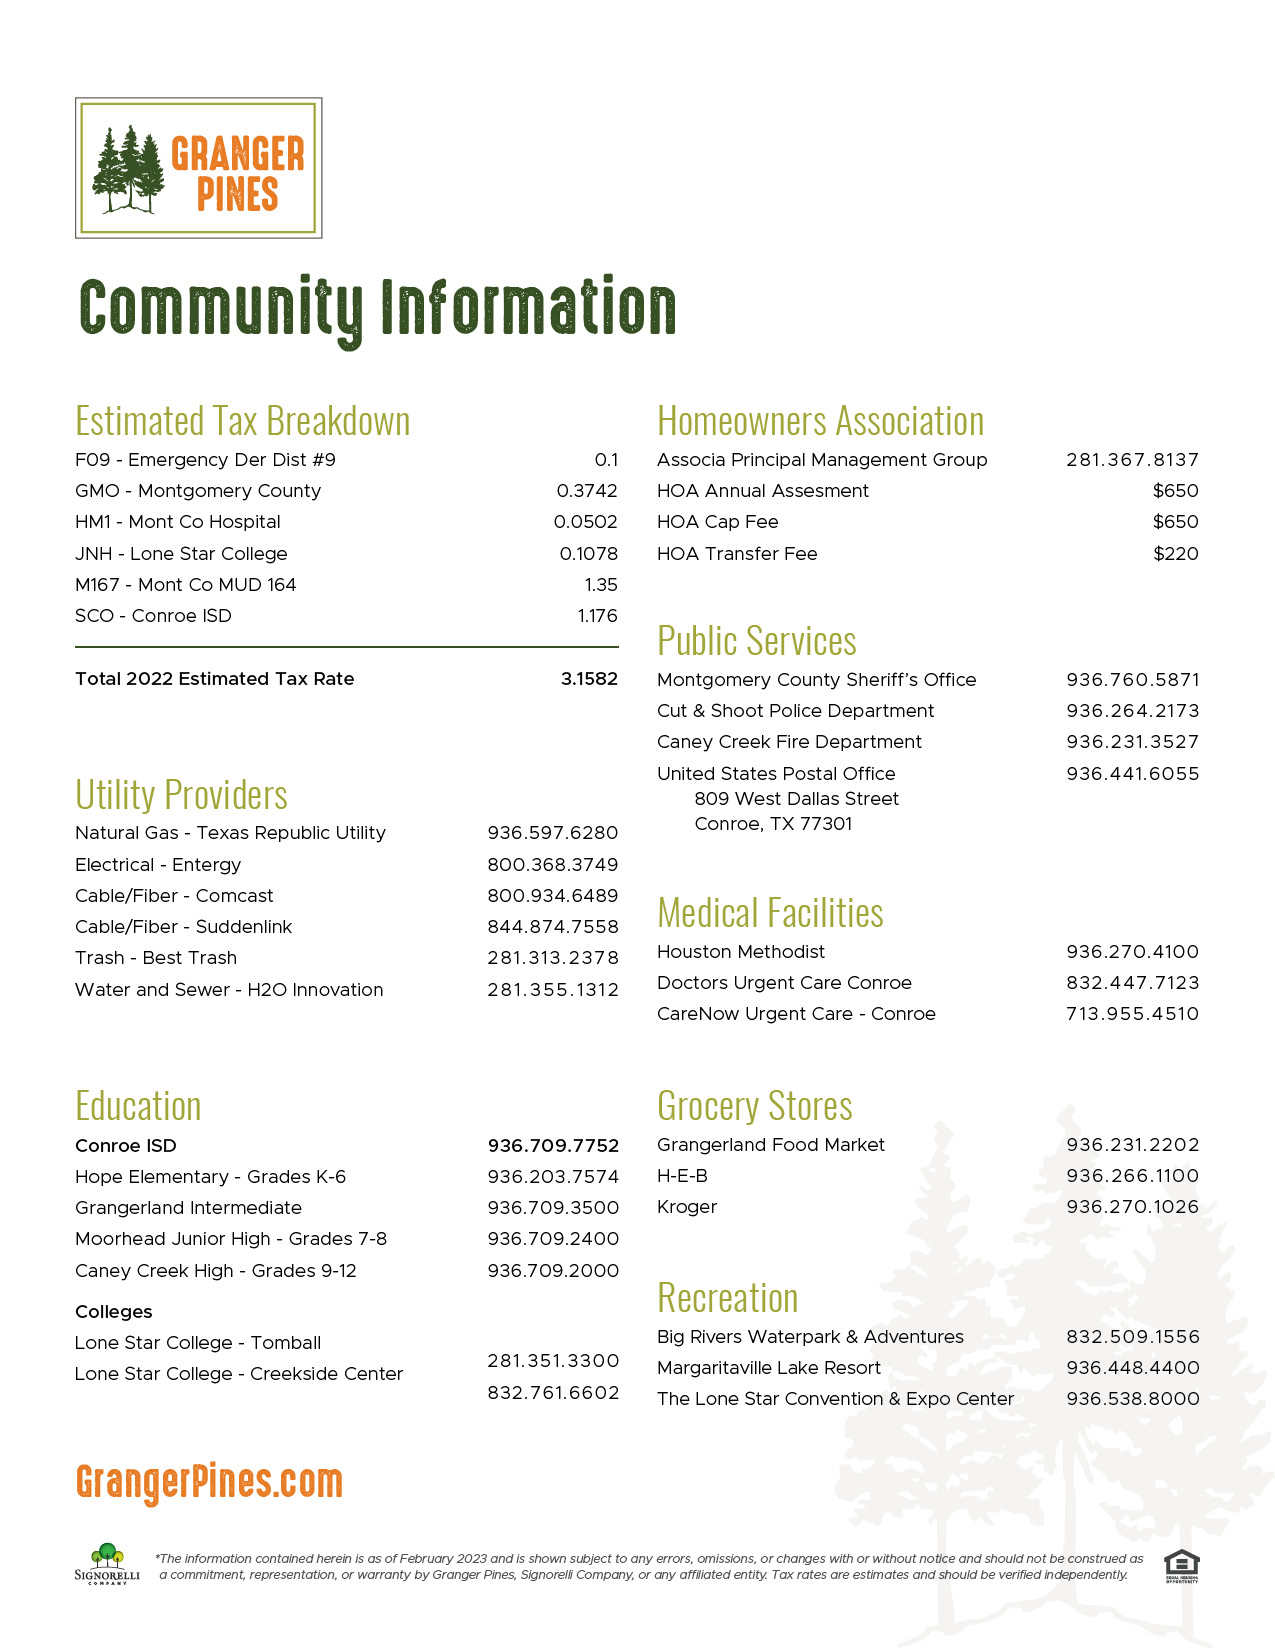 Community Information Sheet